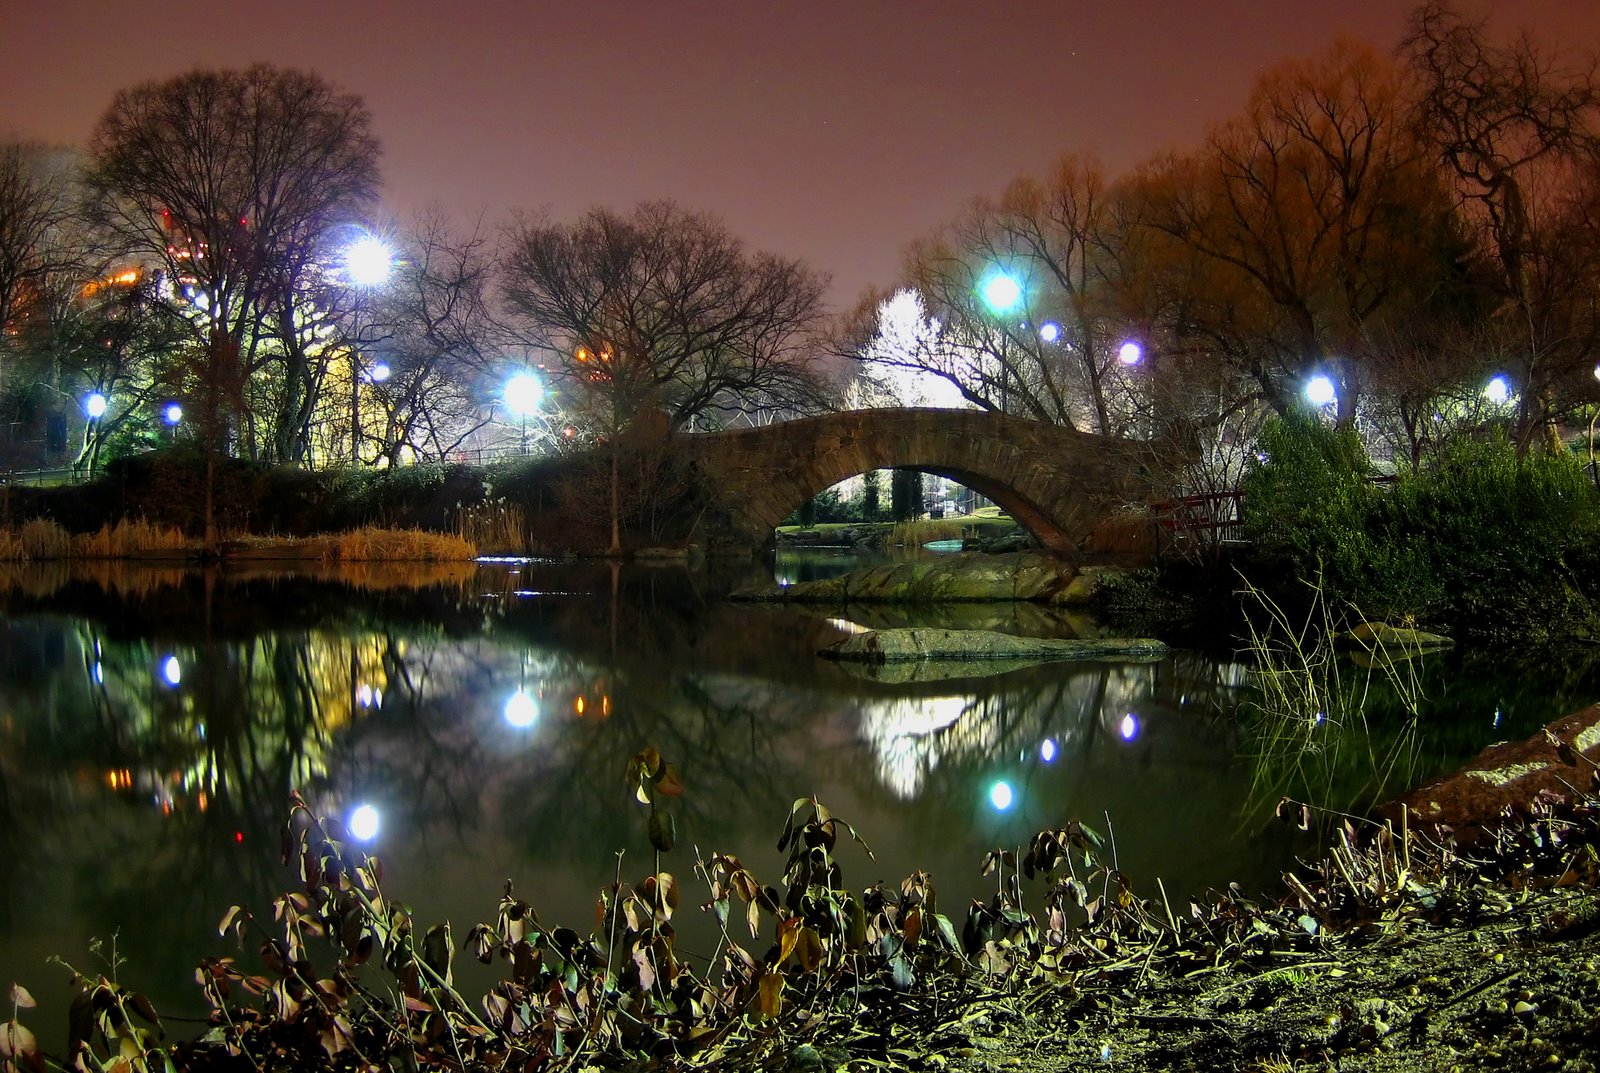 Central park at night